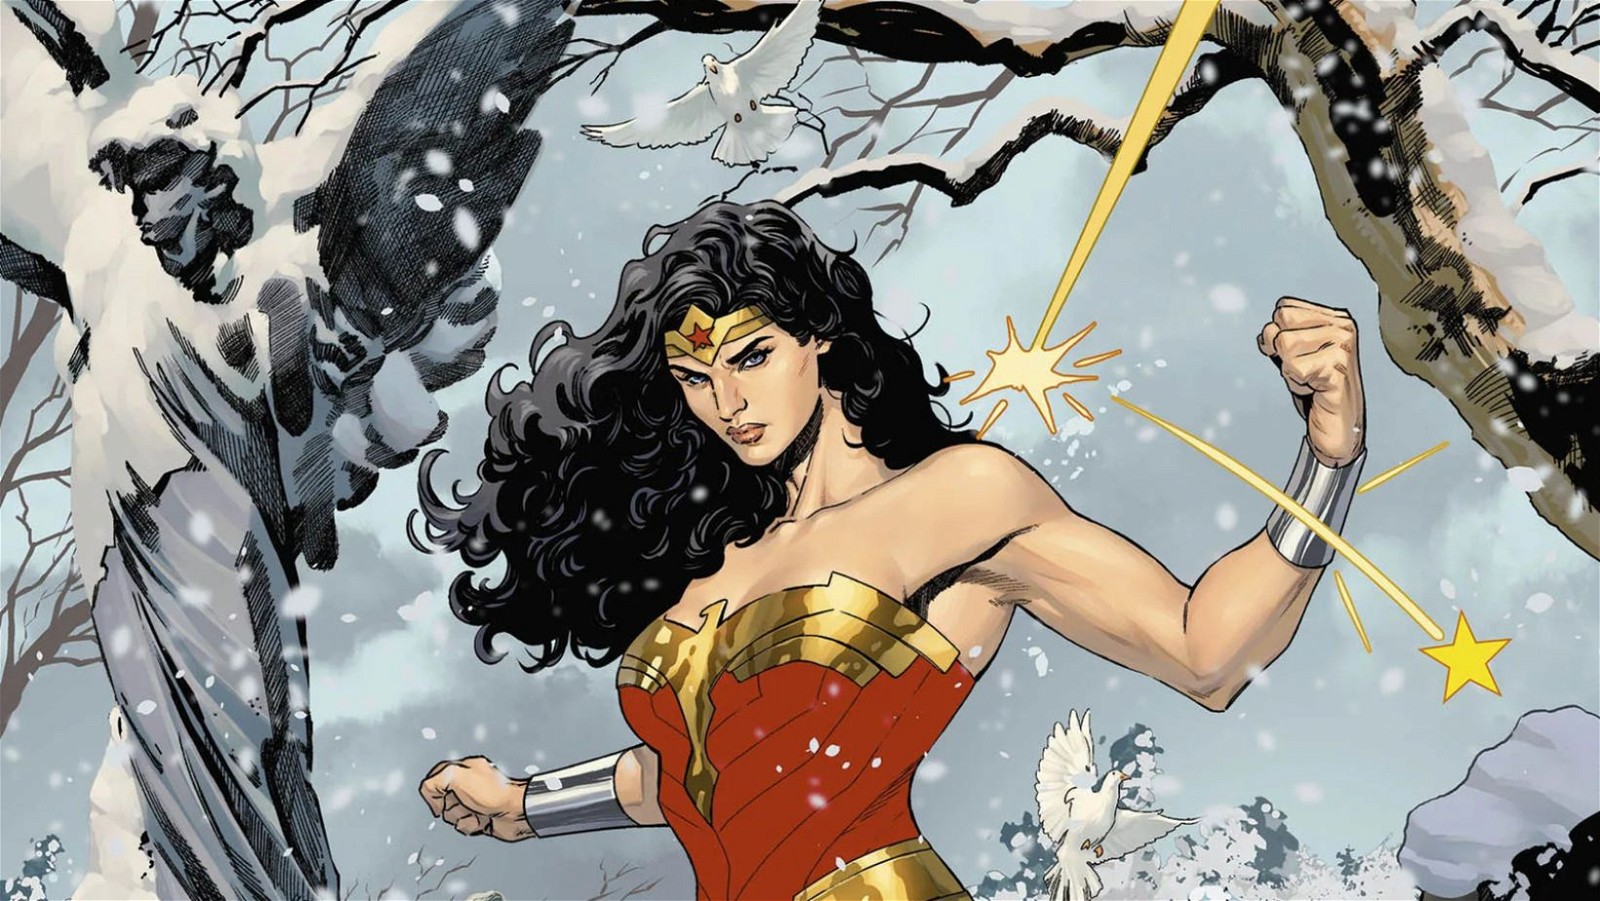 Wonder Woman is a formidable DC hero